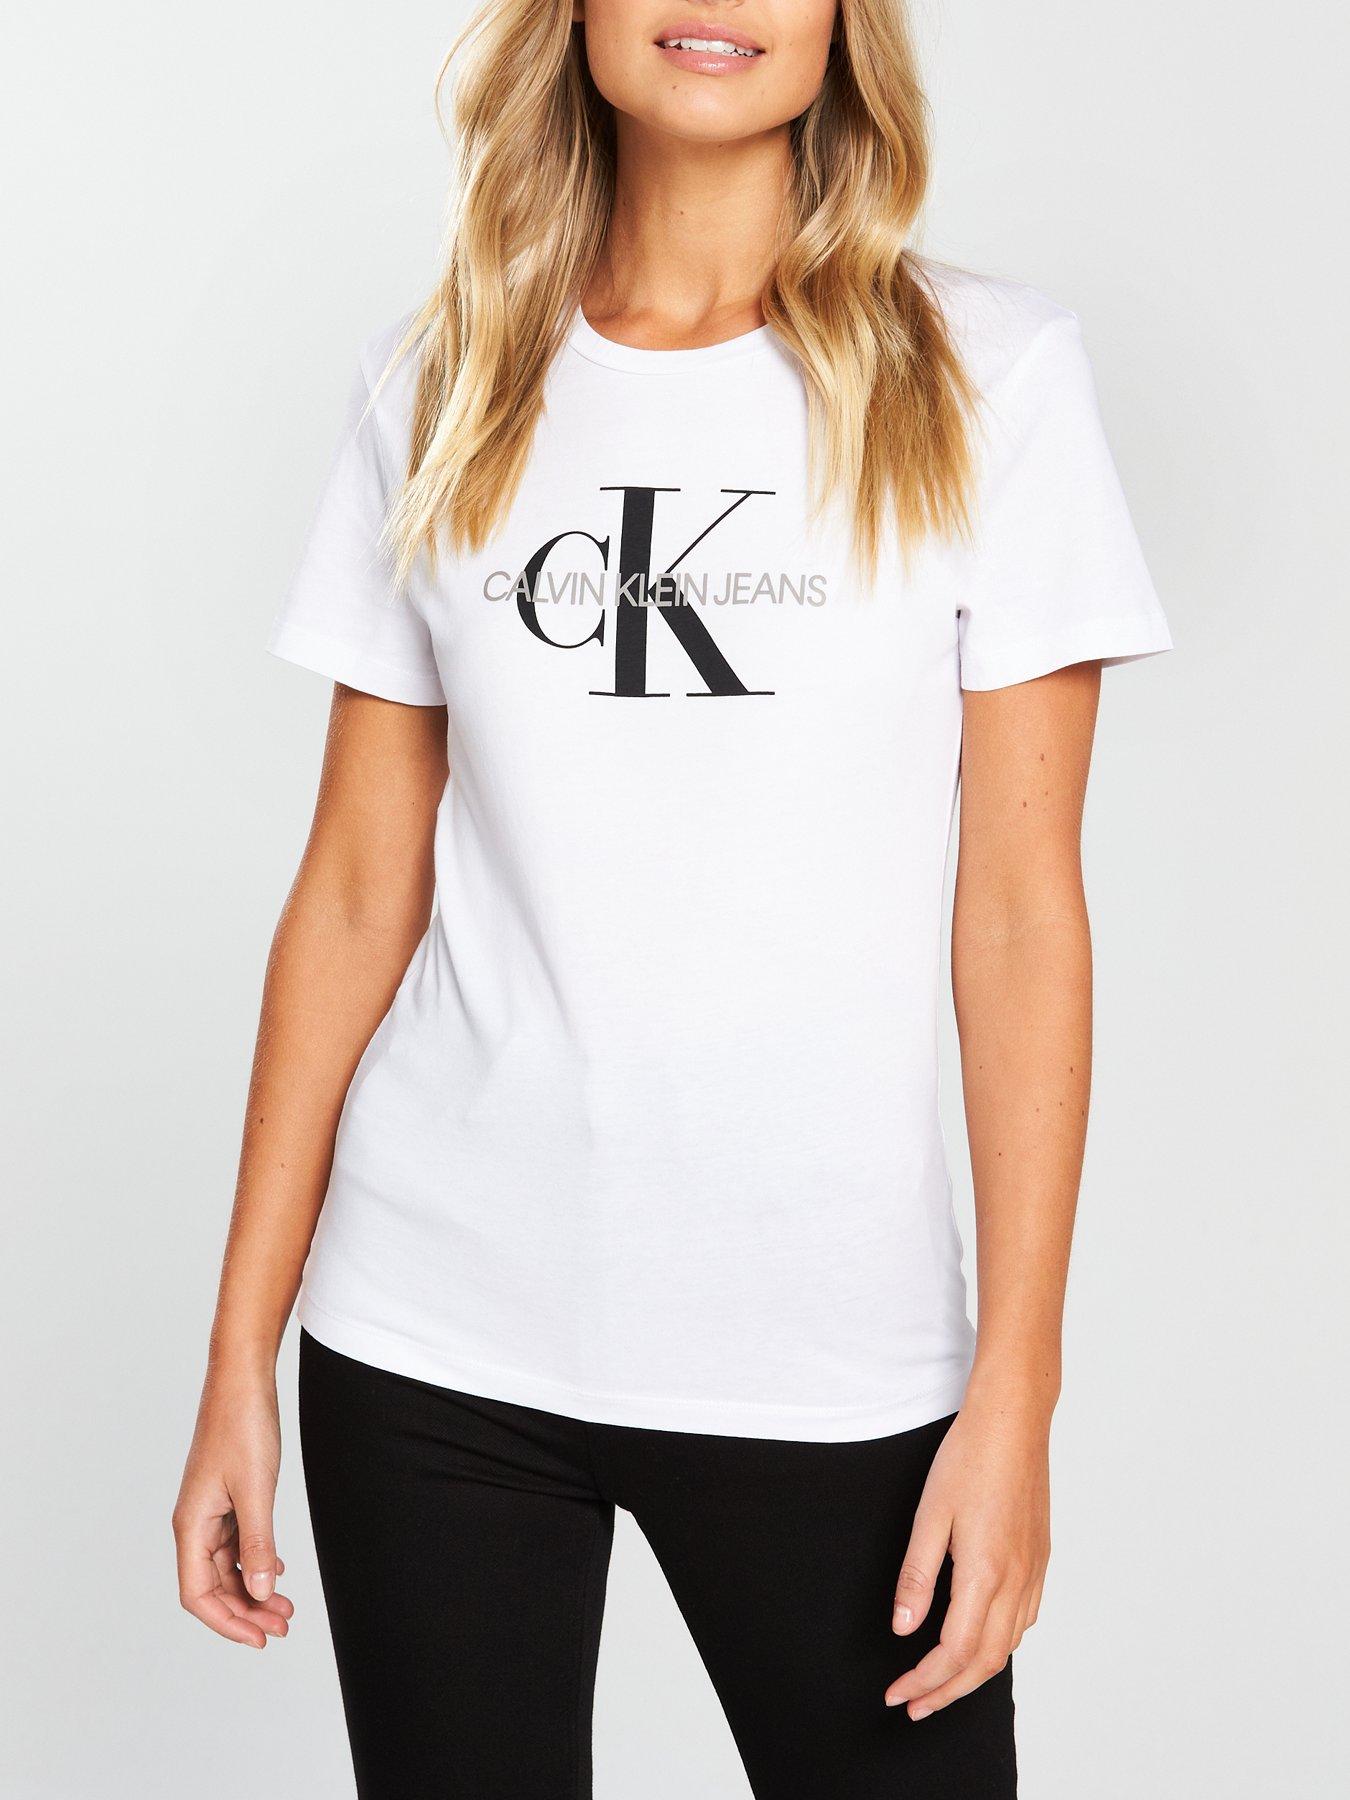 calvin klein logo t shirt women's white